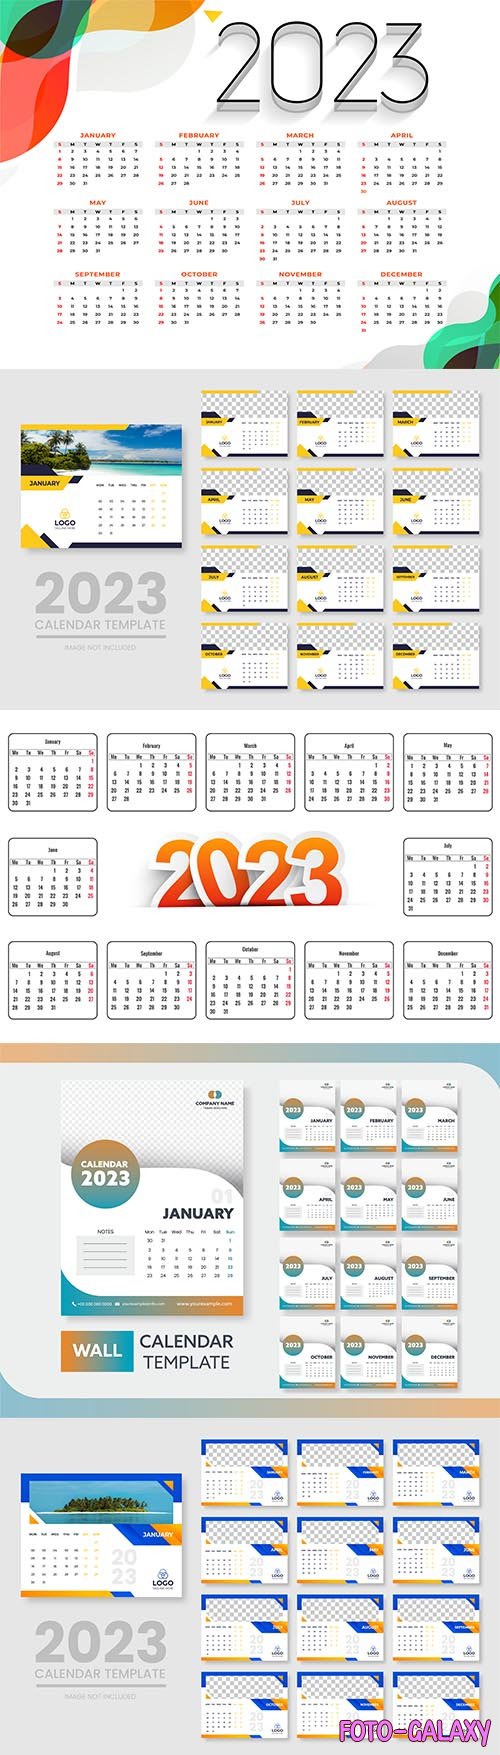 Abstract 2023 calendar template design